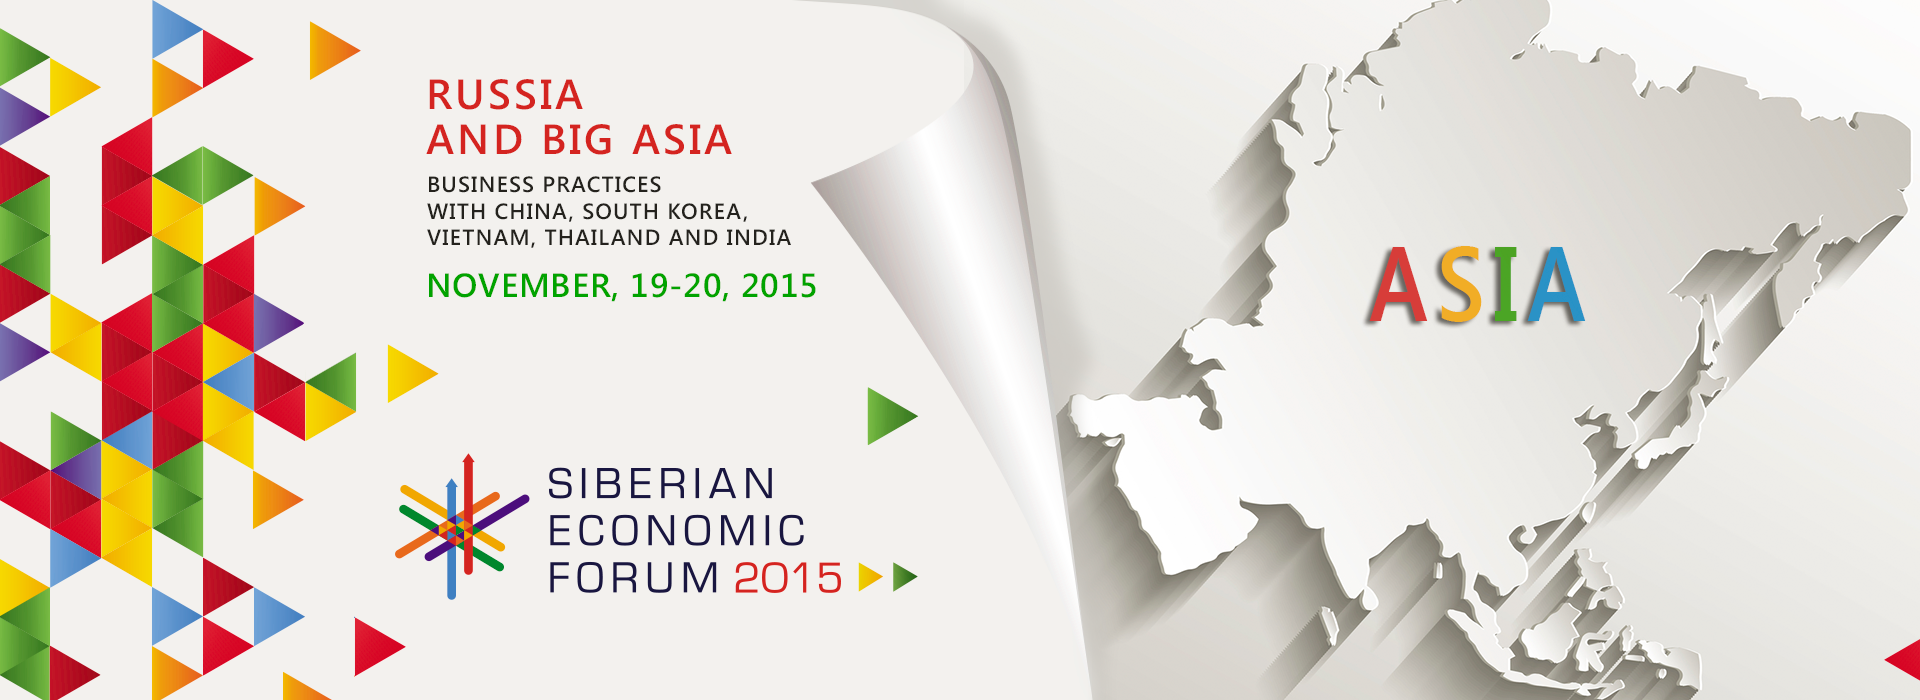 RMAA Group Spoke at Siberian Economic Forum 2015, pic. 1